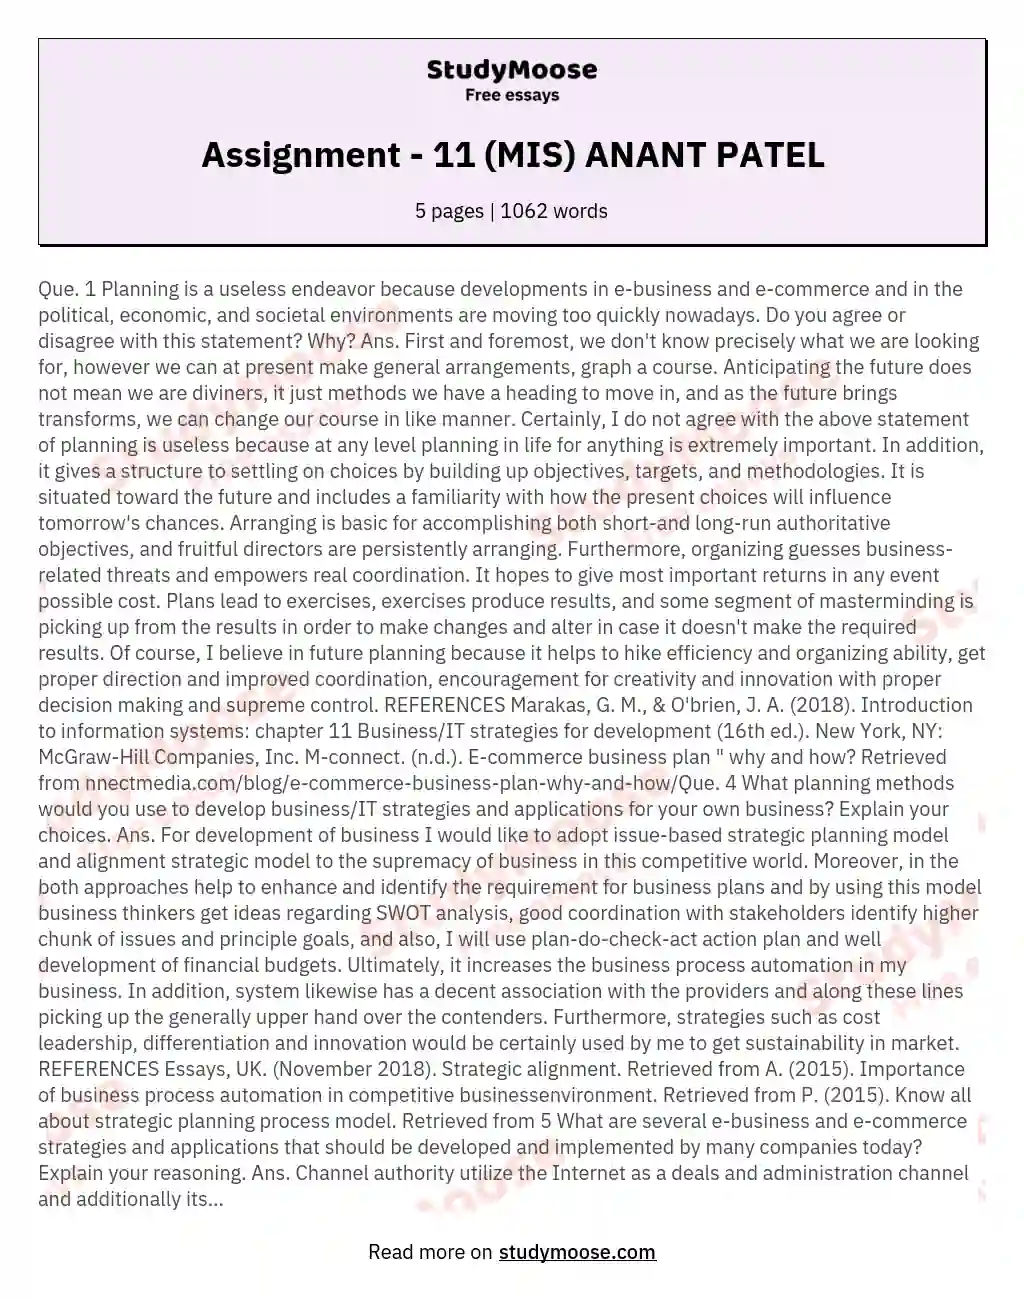 Assignment - 11 (MIS) ANANT PATEL